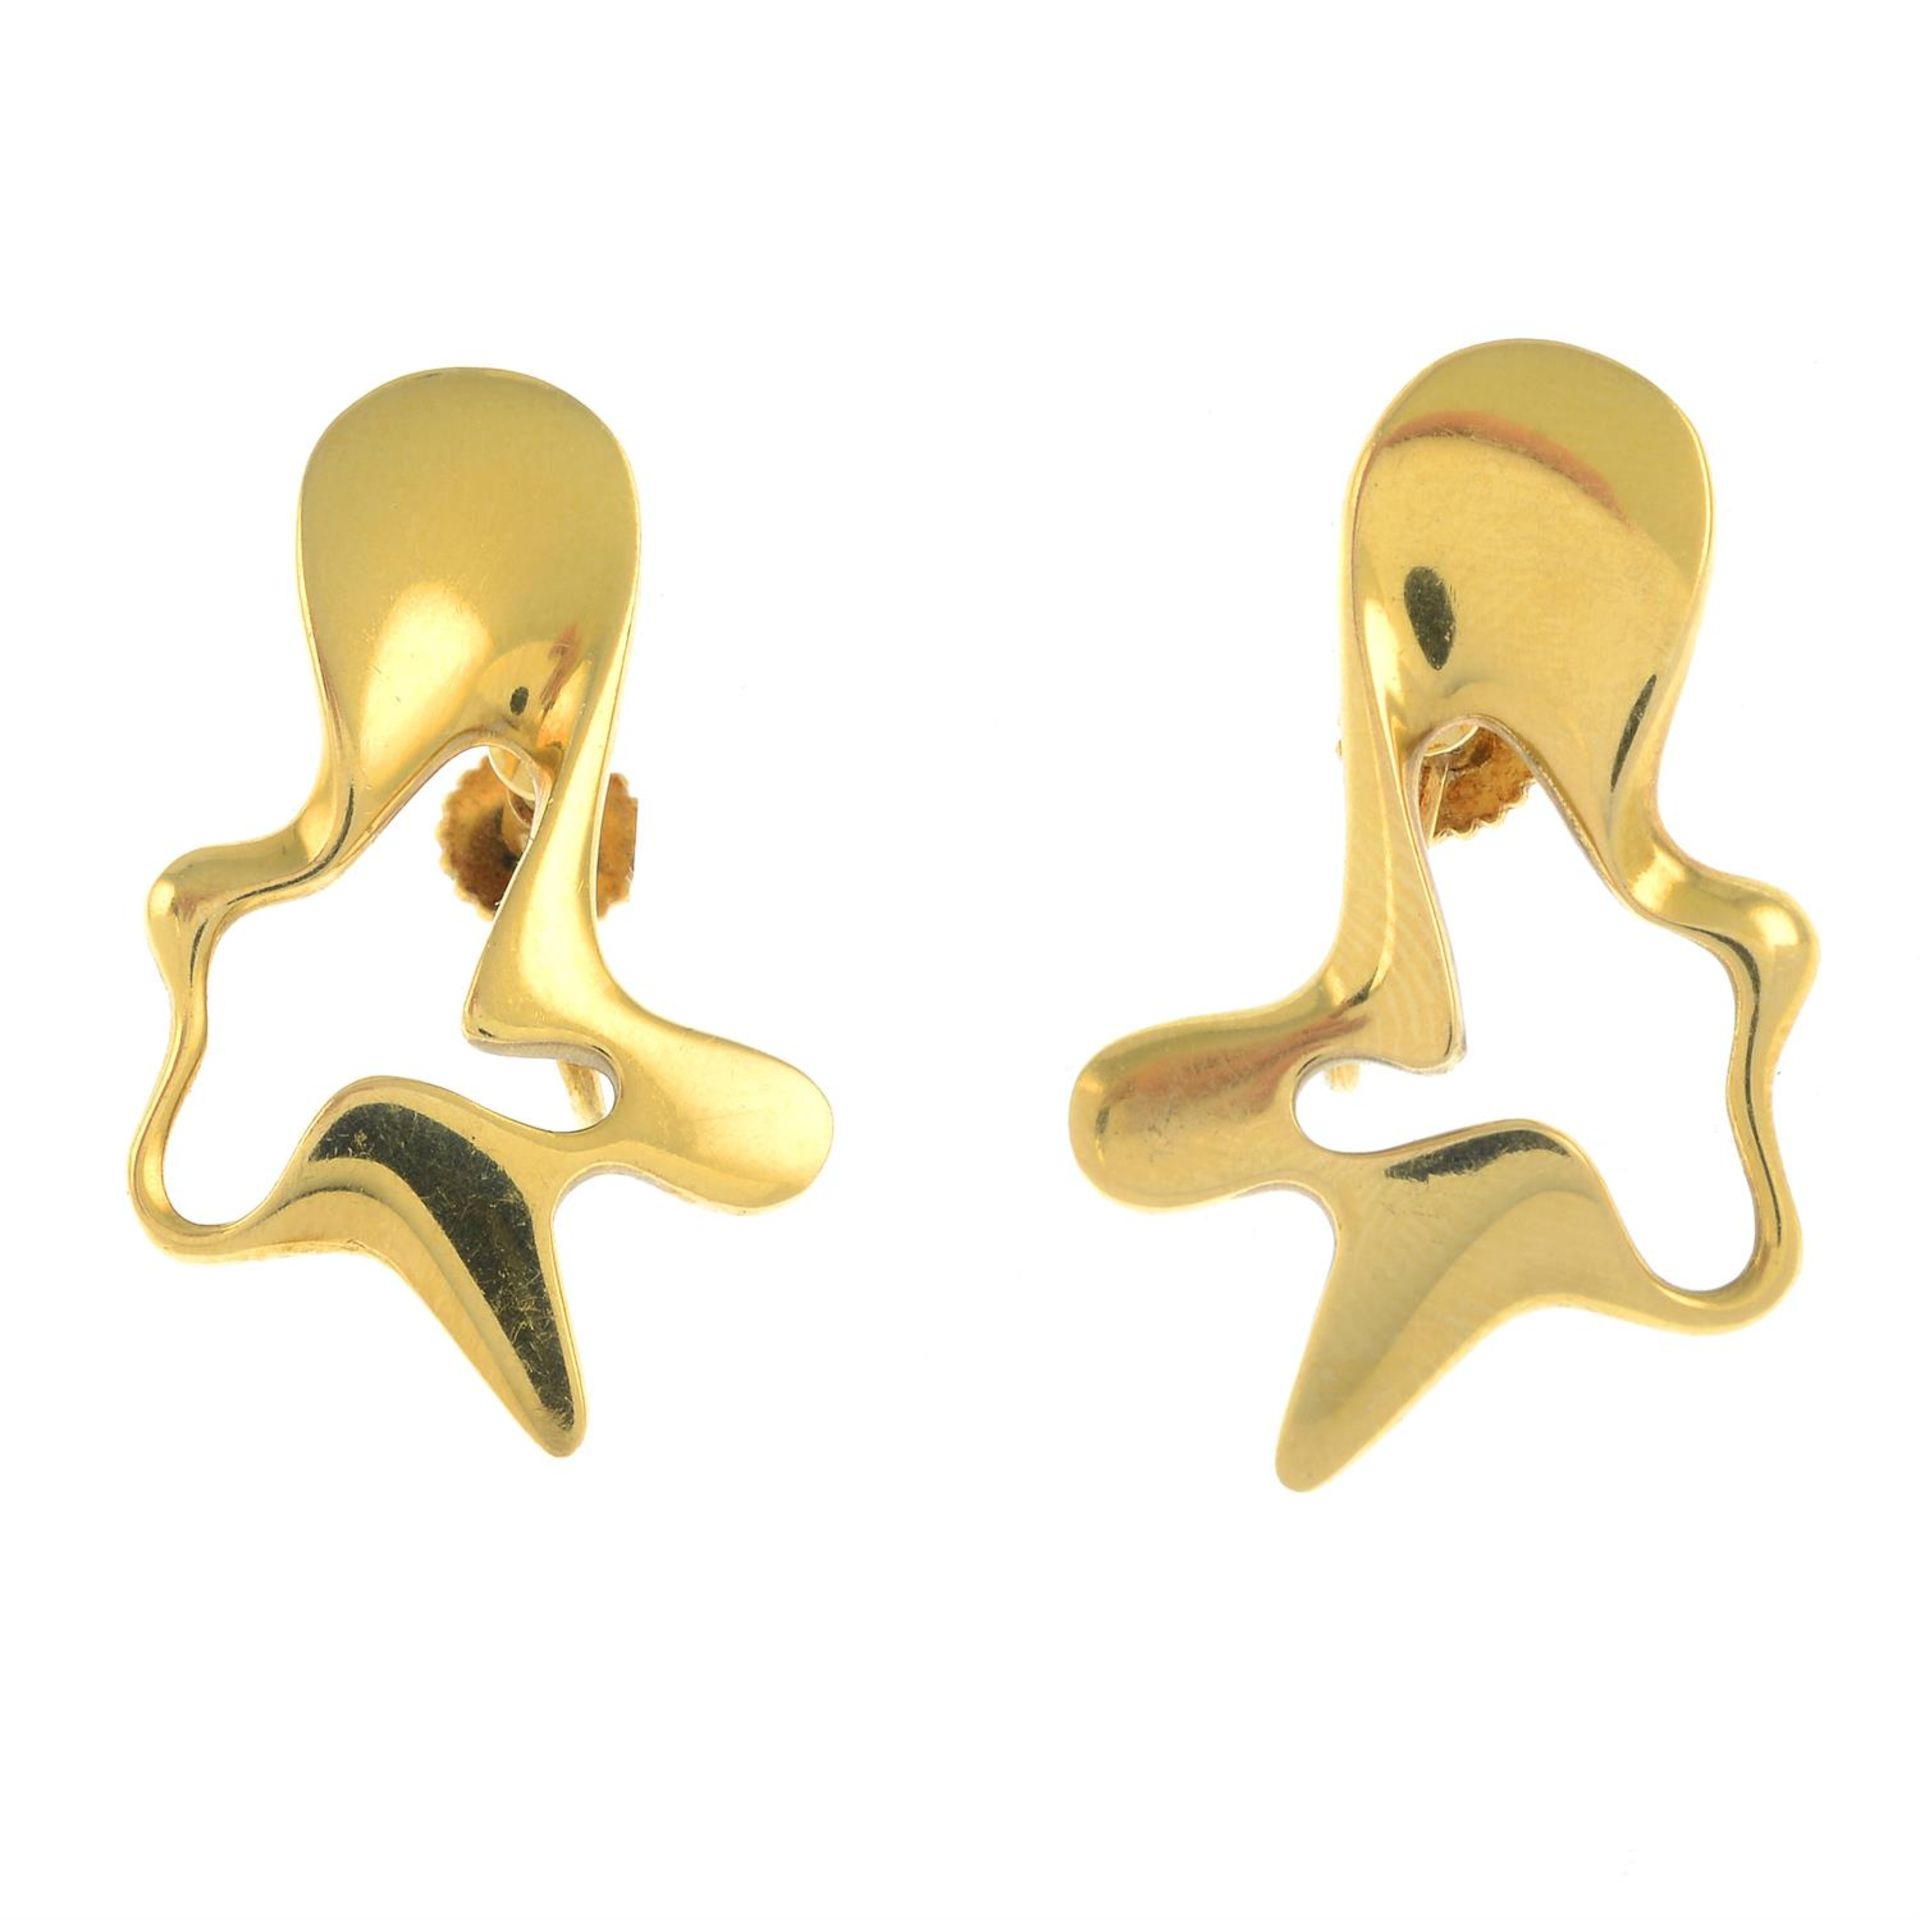 A pair of 'Splash' earrings, by Henning Koppel for Georg Jensen. - Image 2 of 3